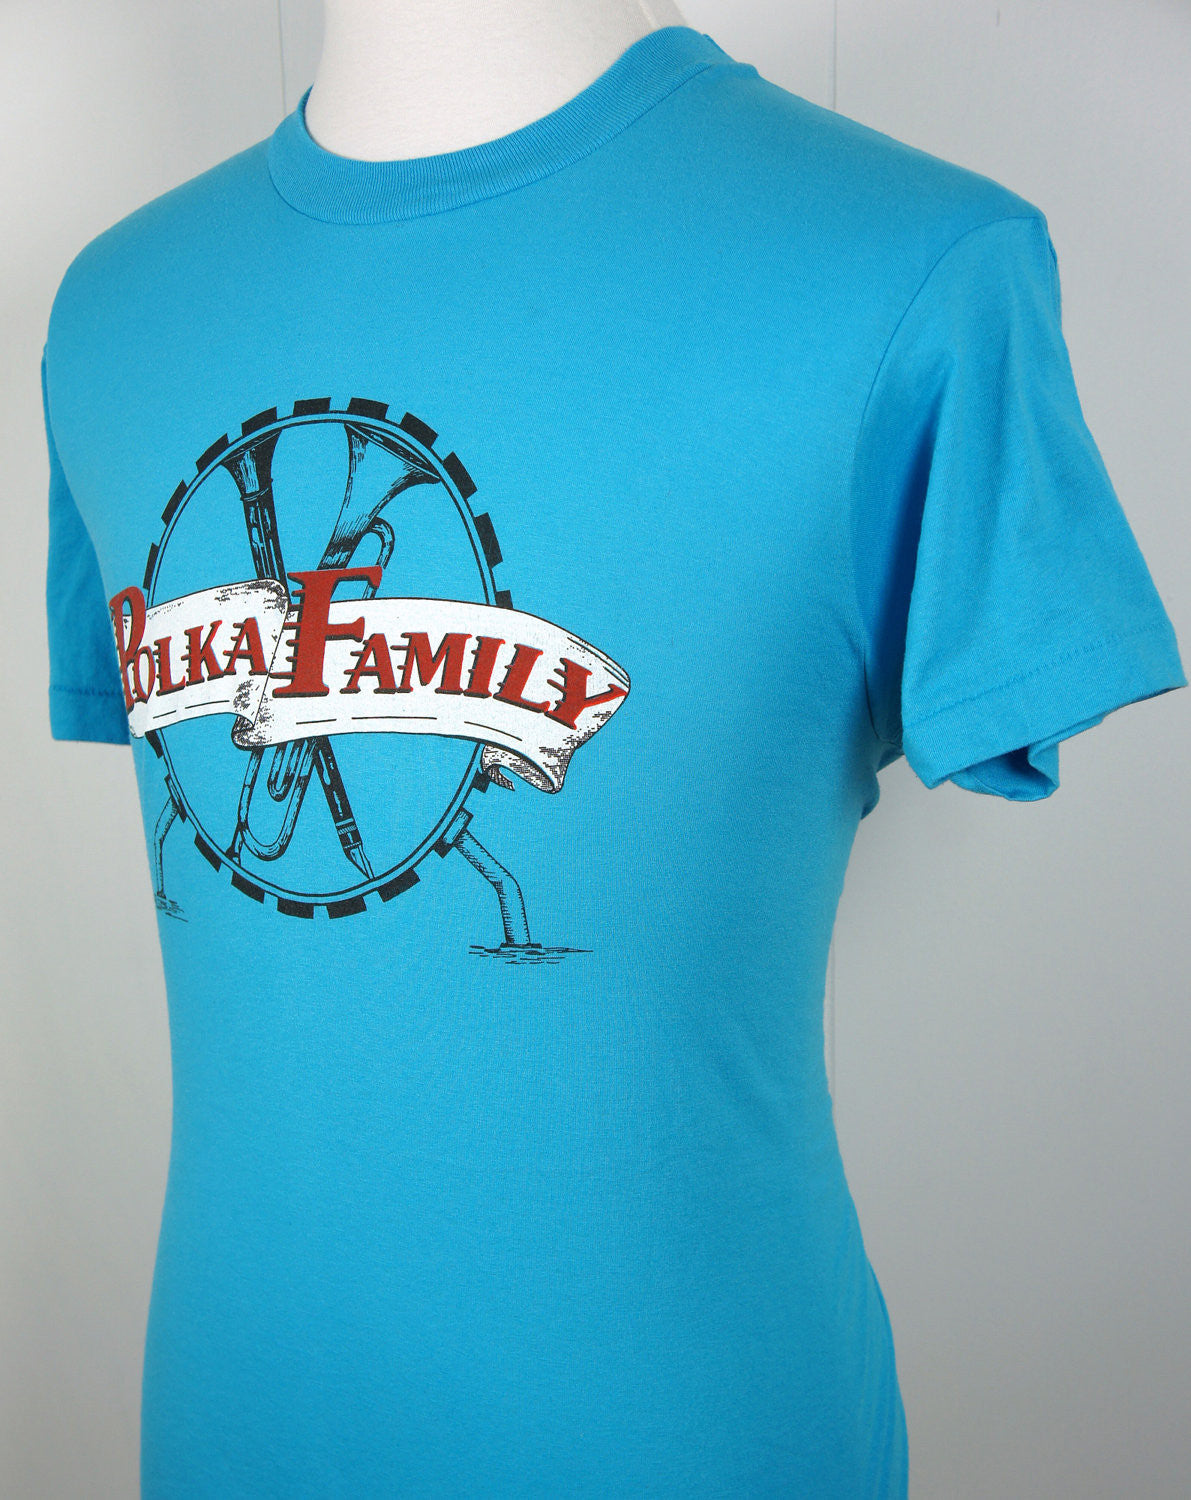 1980's Polka Family Band T-Shirt - Size M